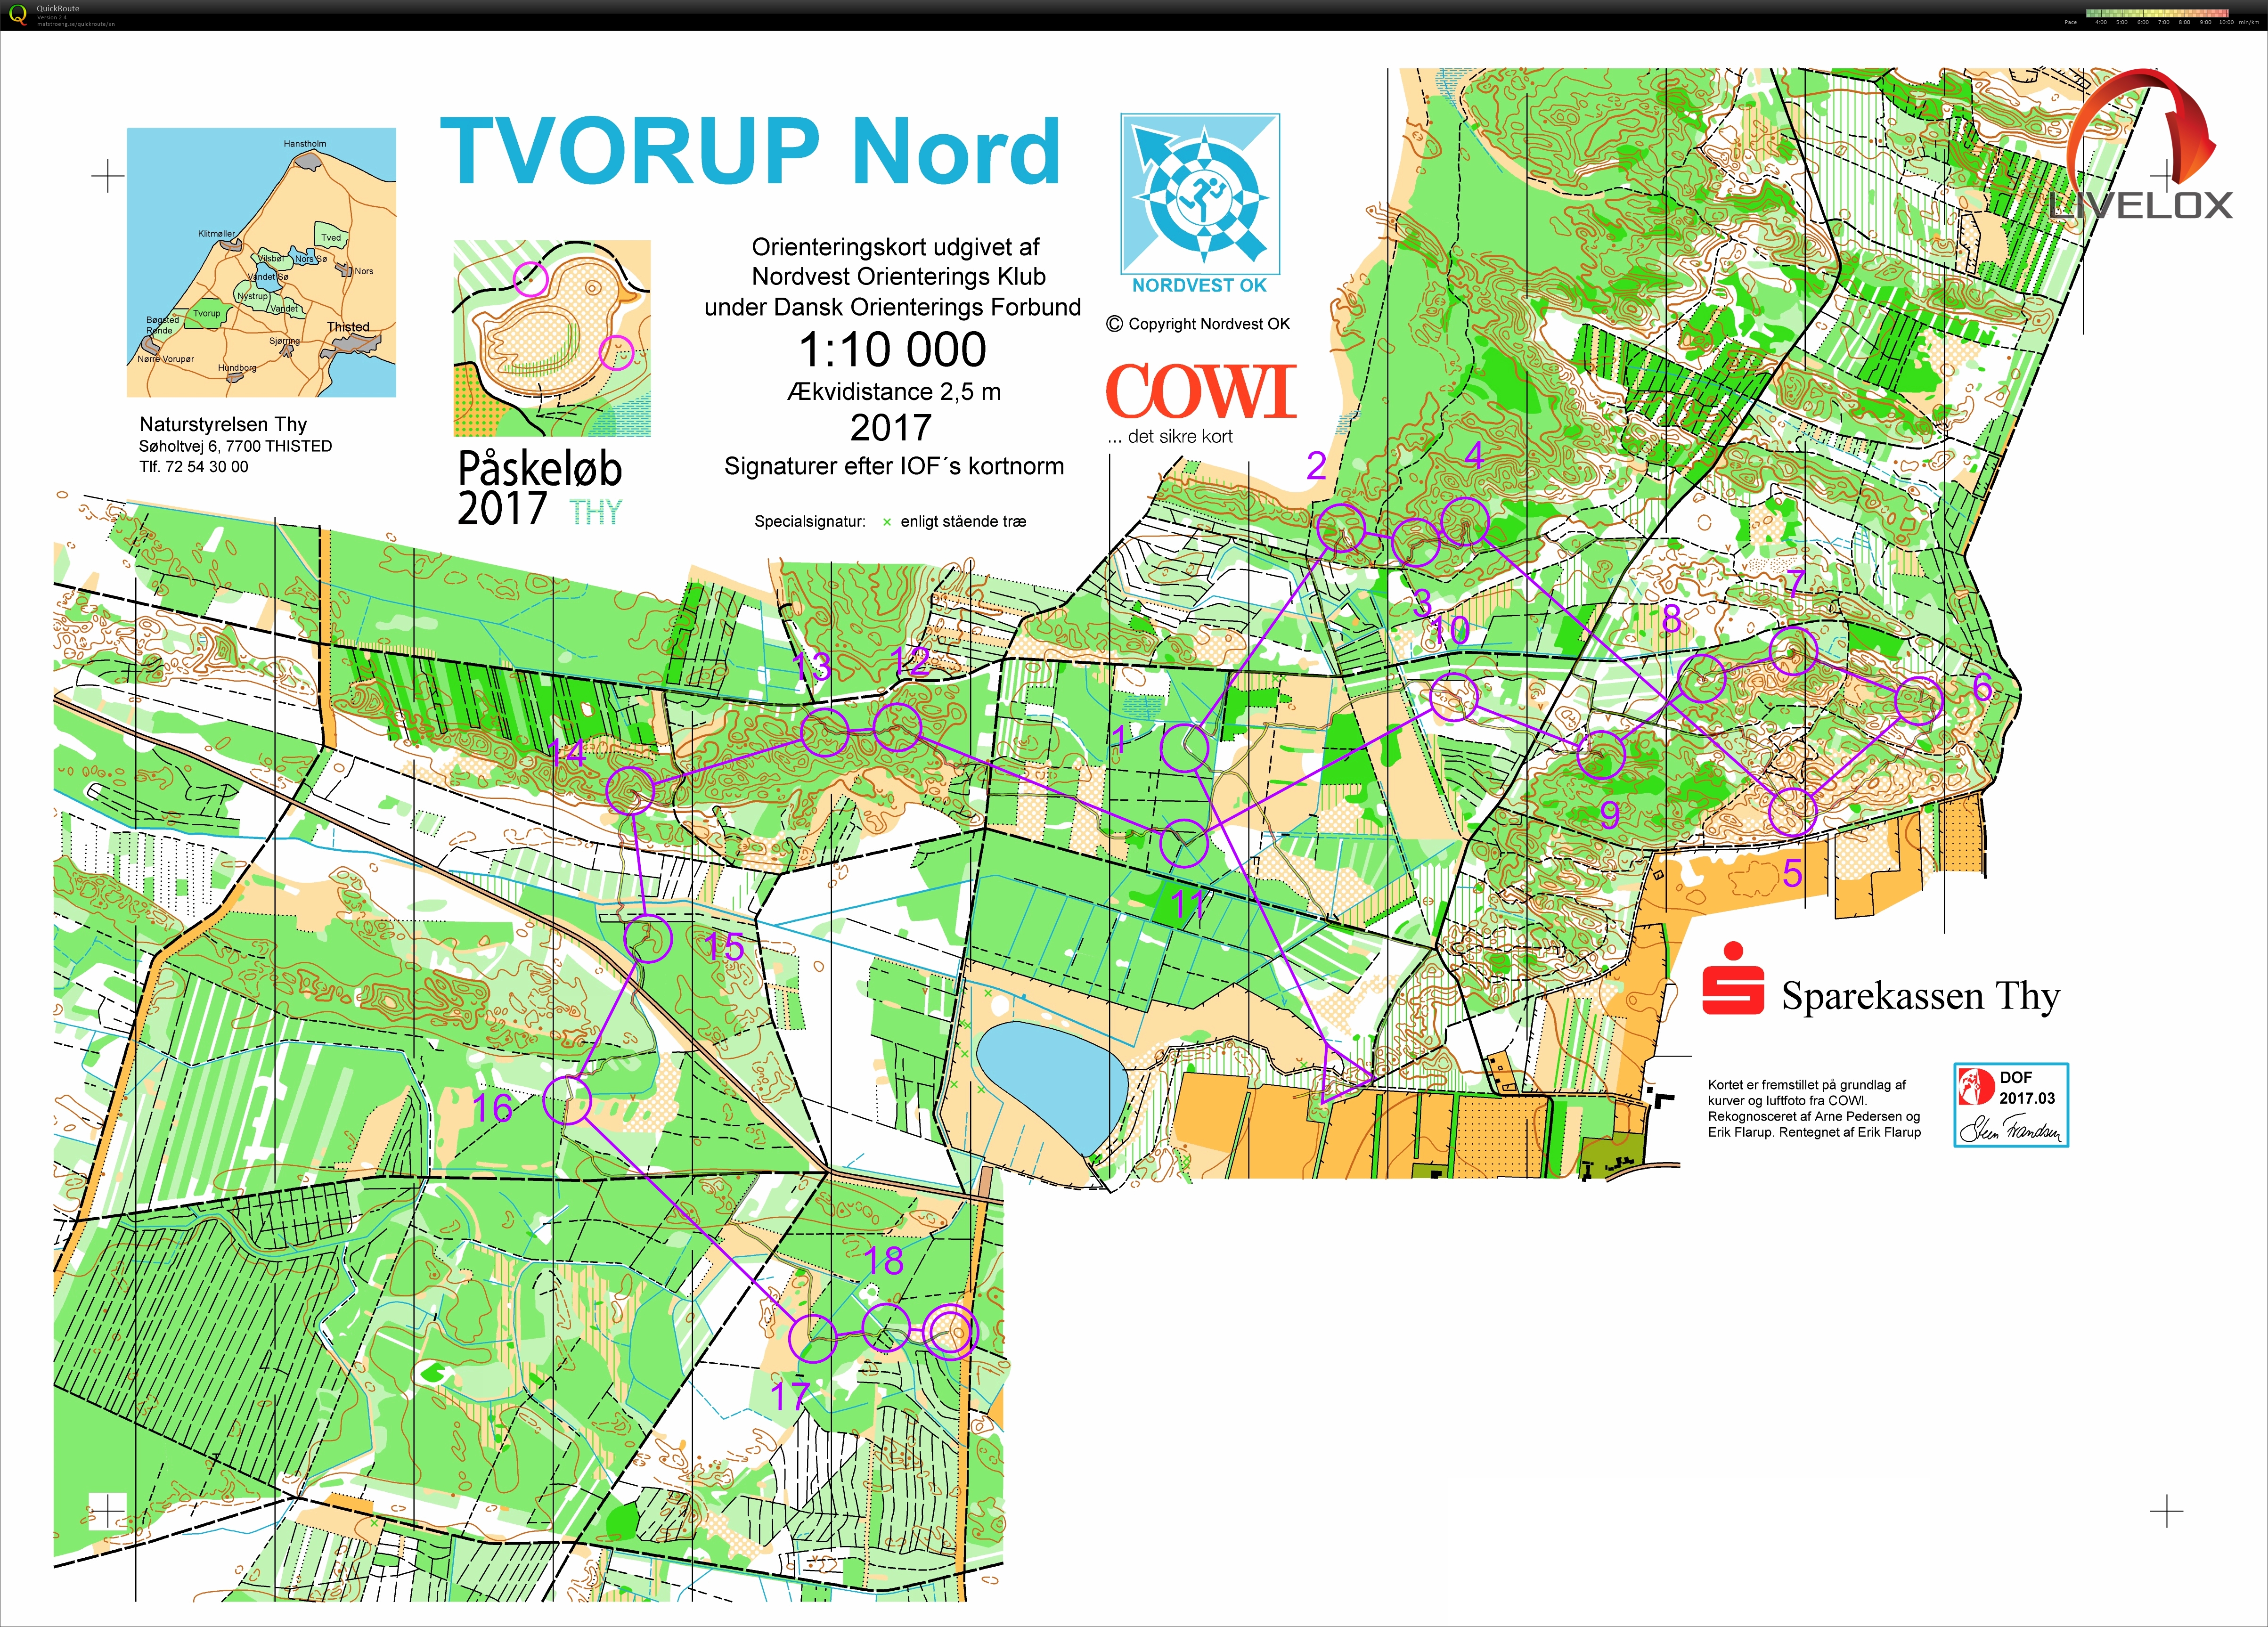 Tvorup Nord påskeløb 2017 etape 2 - H21AK (14/04/2017)